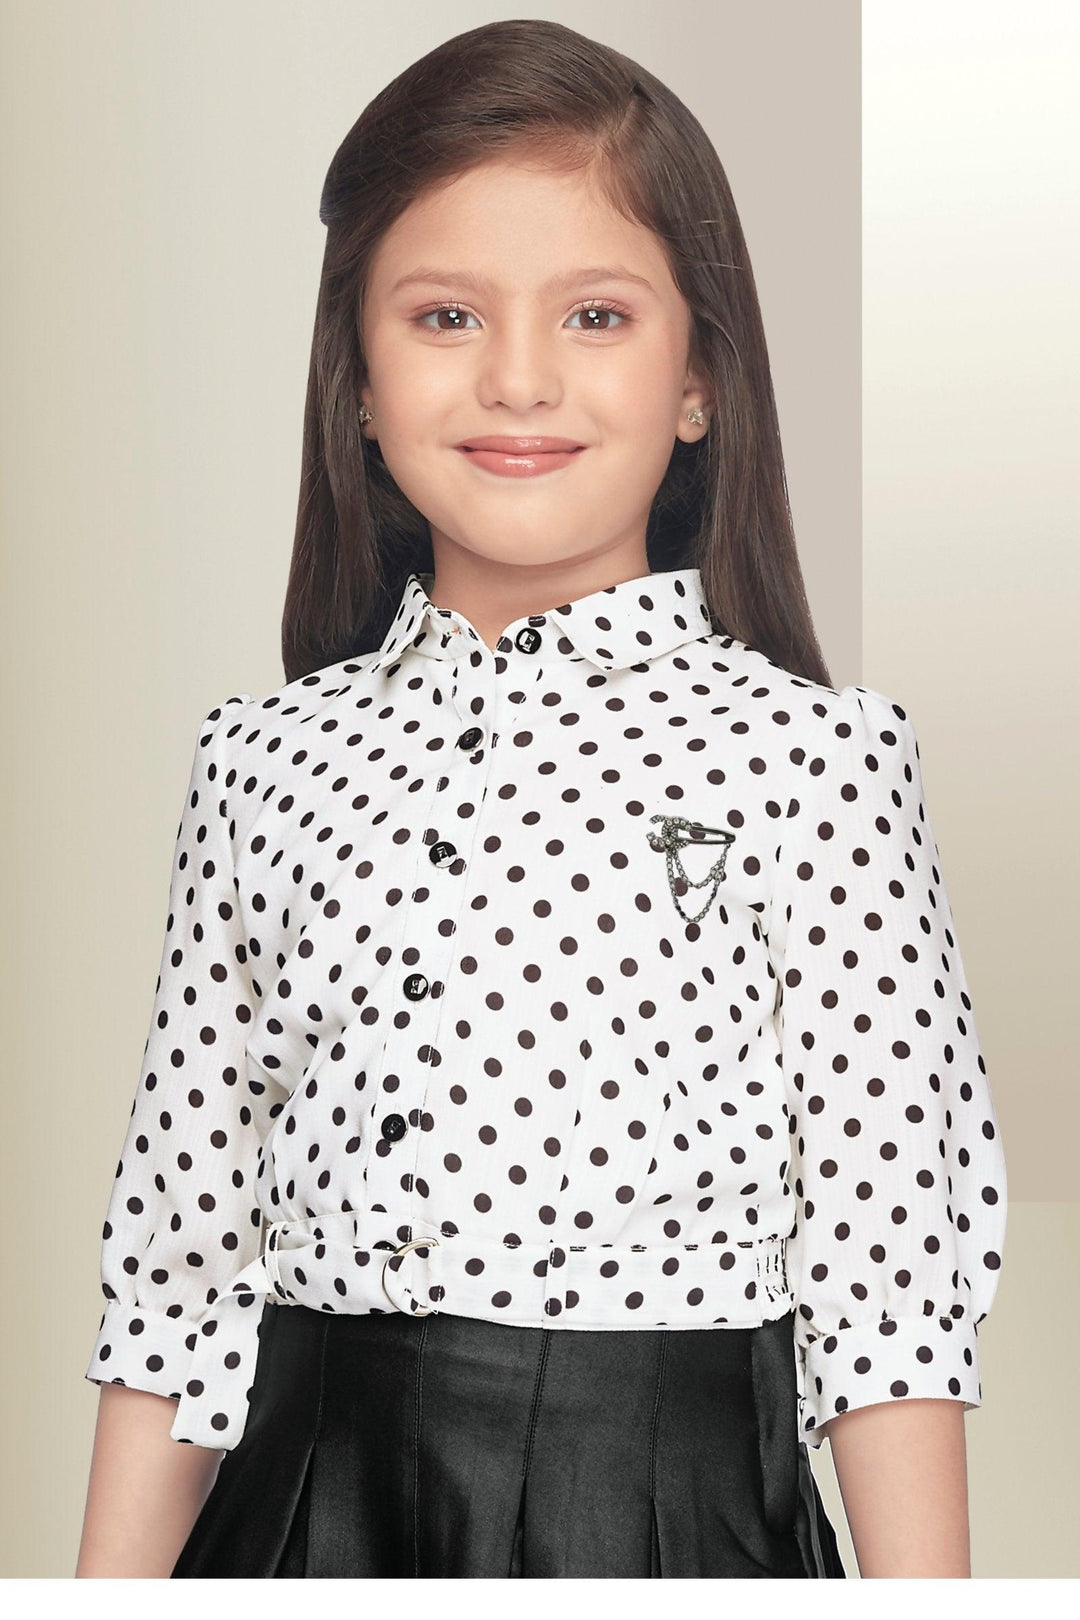 Half White with Black Dot Print Top and Divider Skirt for Girls - Seasons Chennai